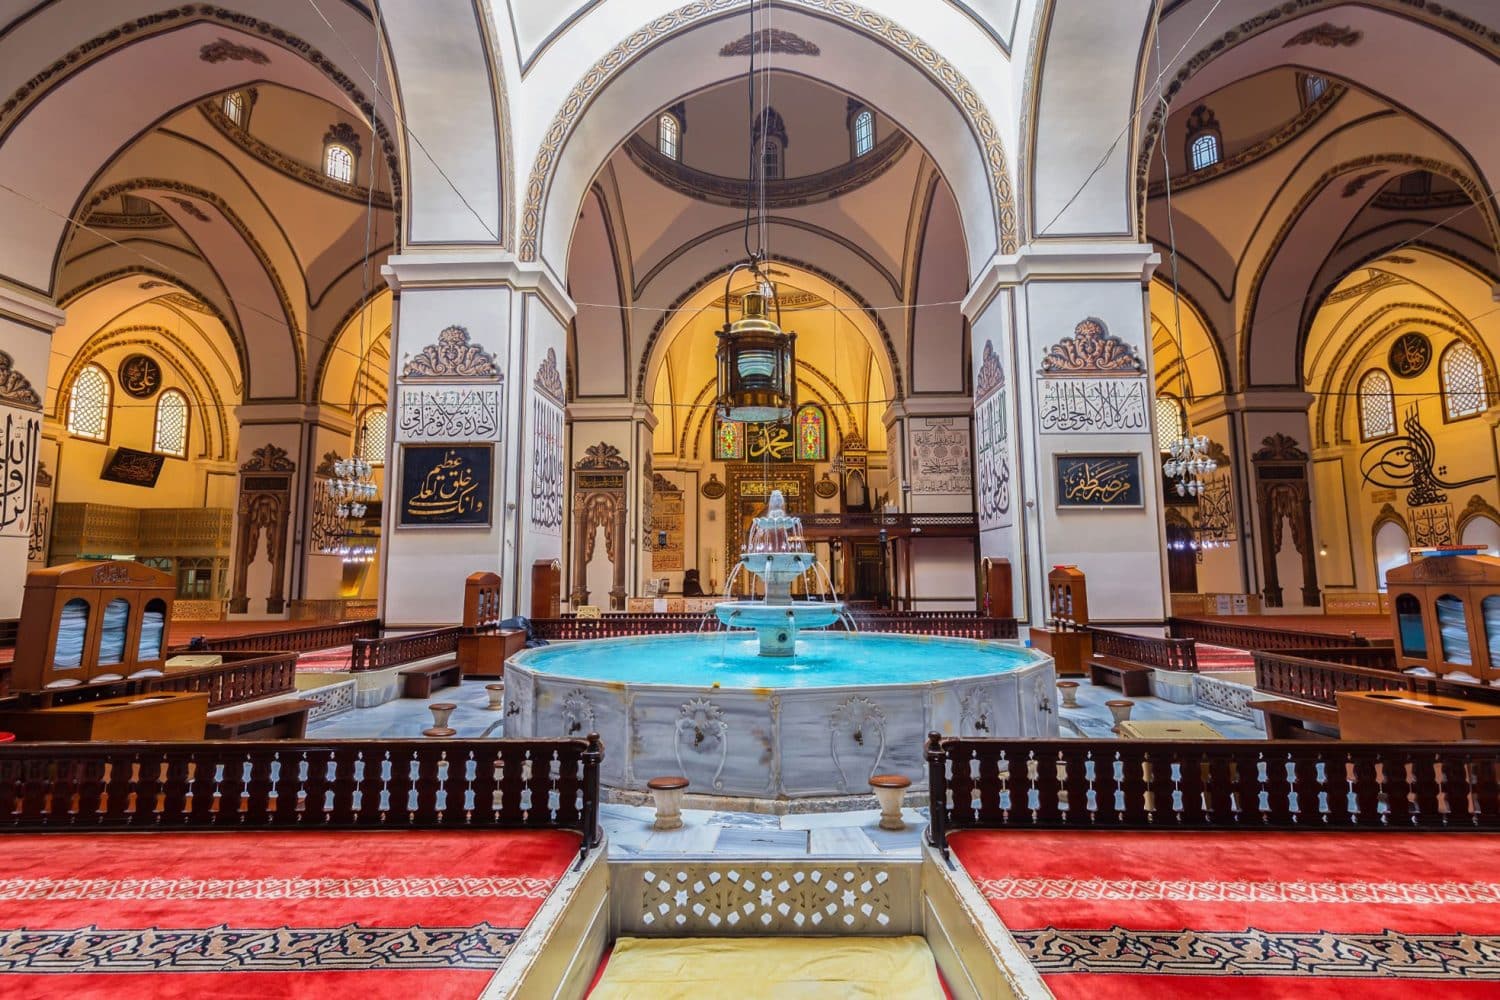 Tour Photos: Bursa Grand Mosque interior